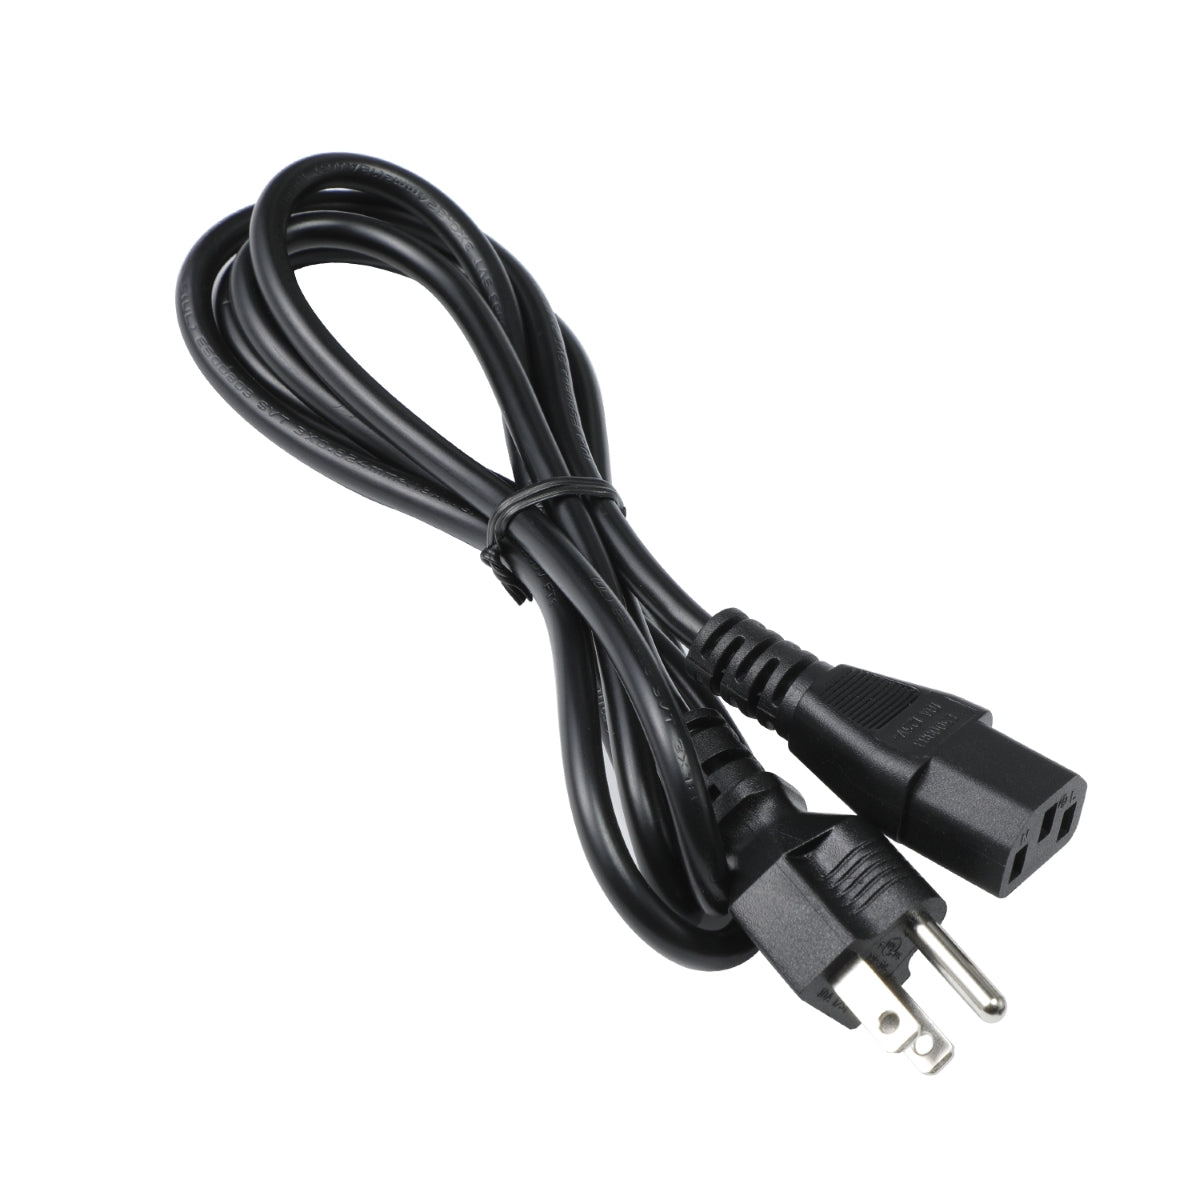 Power Cord for Dell UltraSharp U2417H Monitor